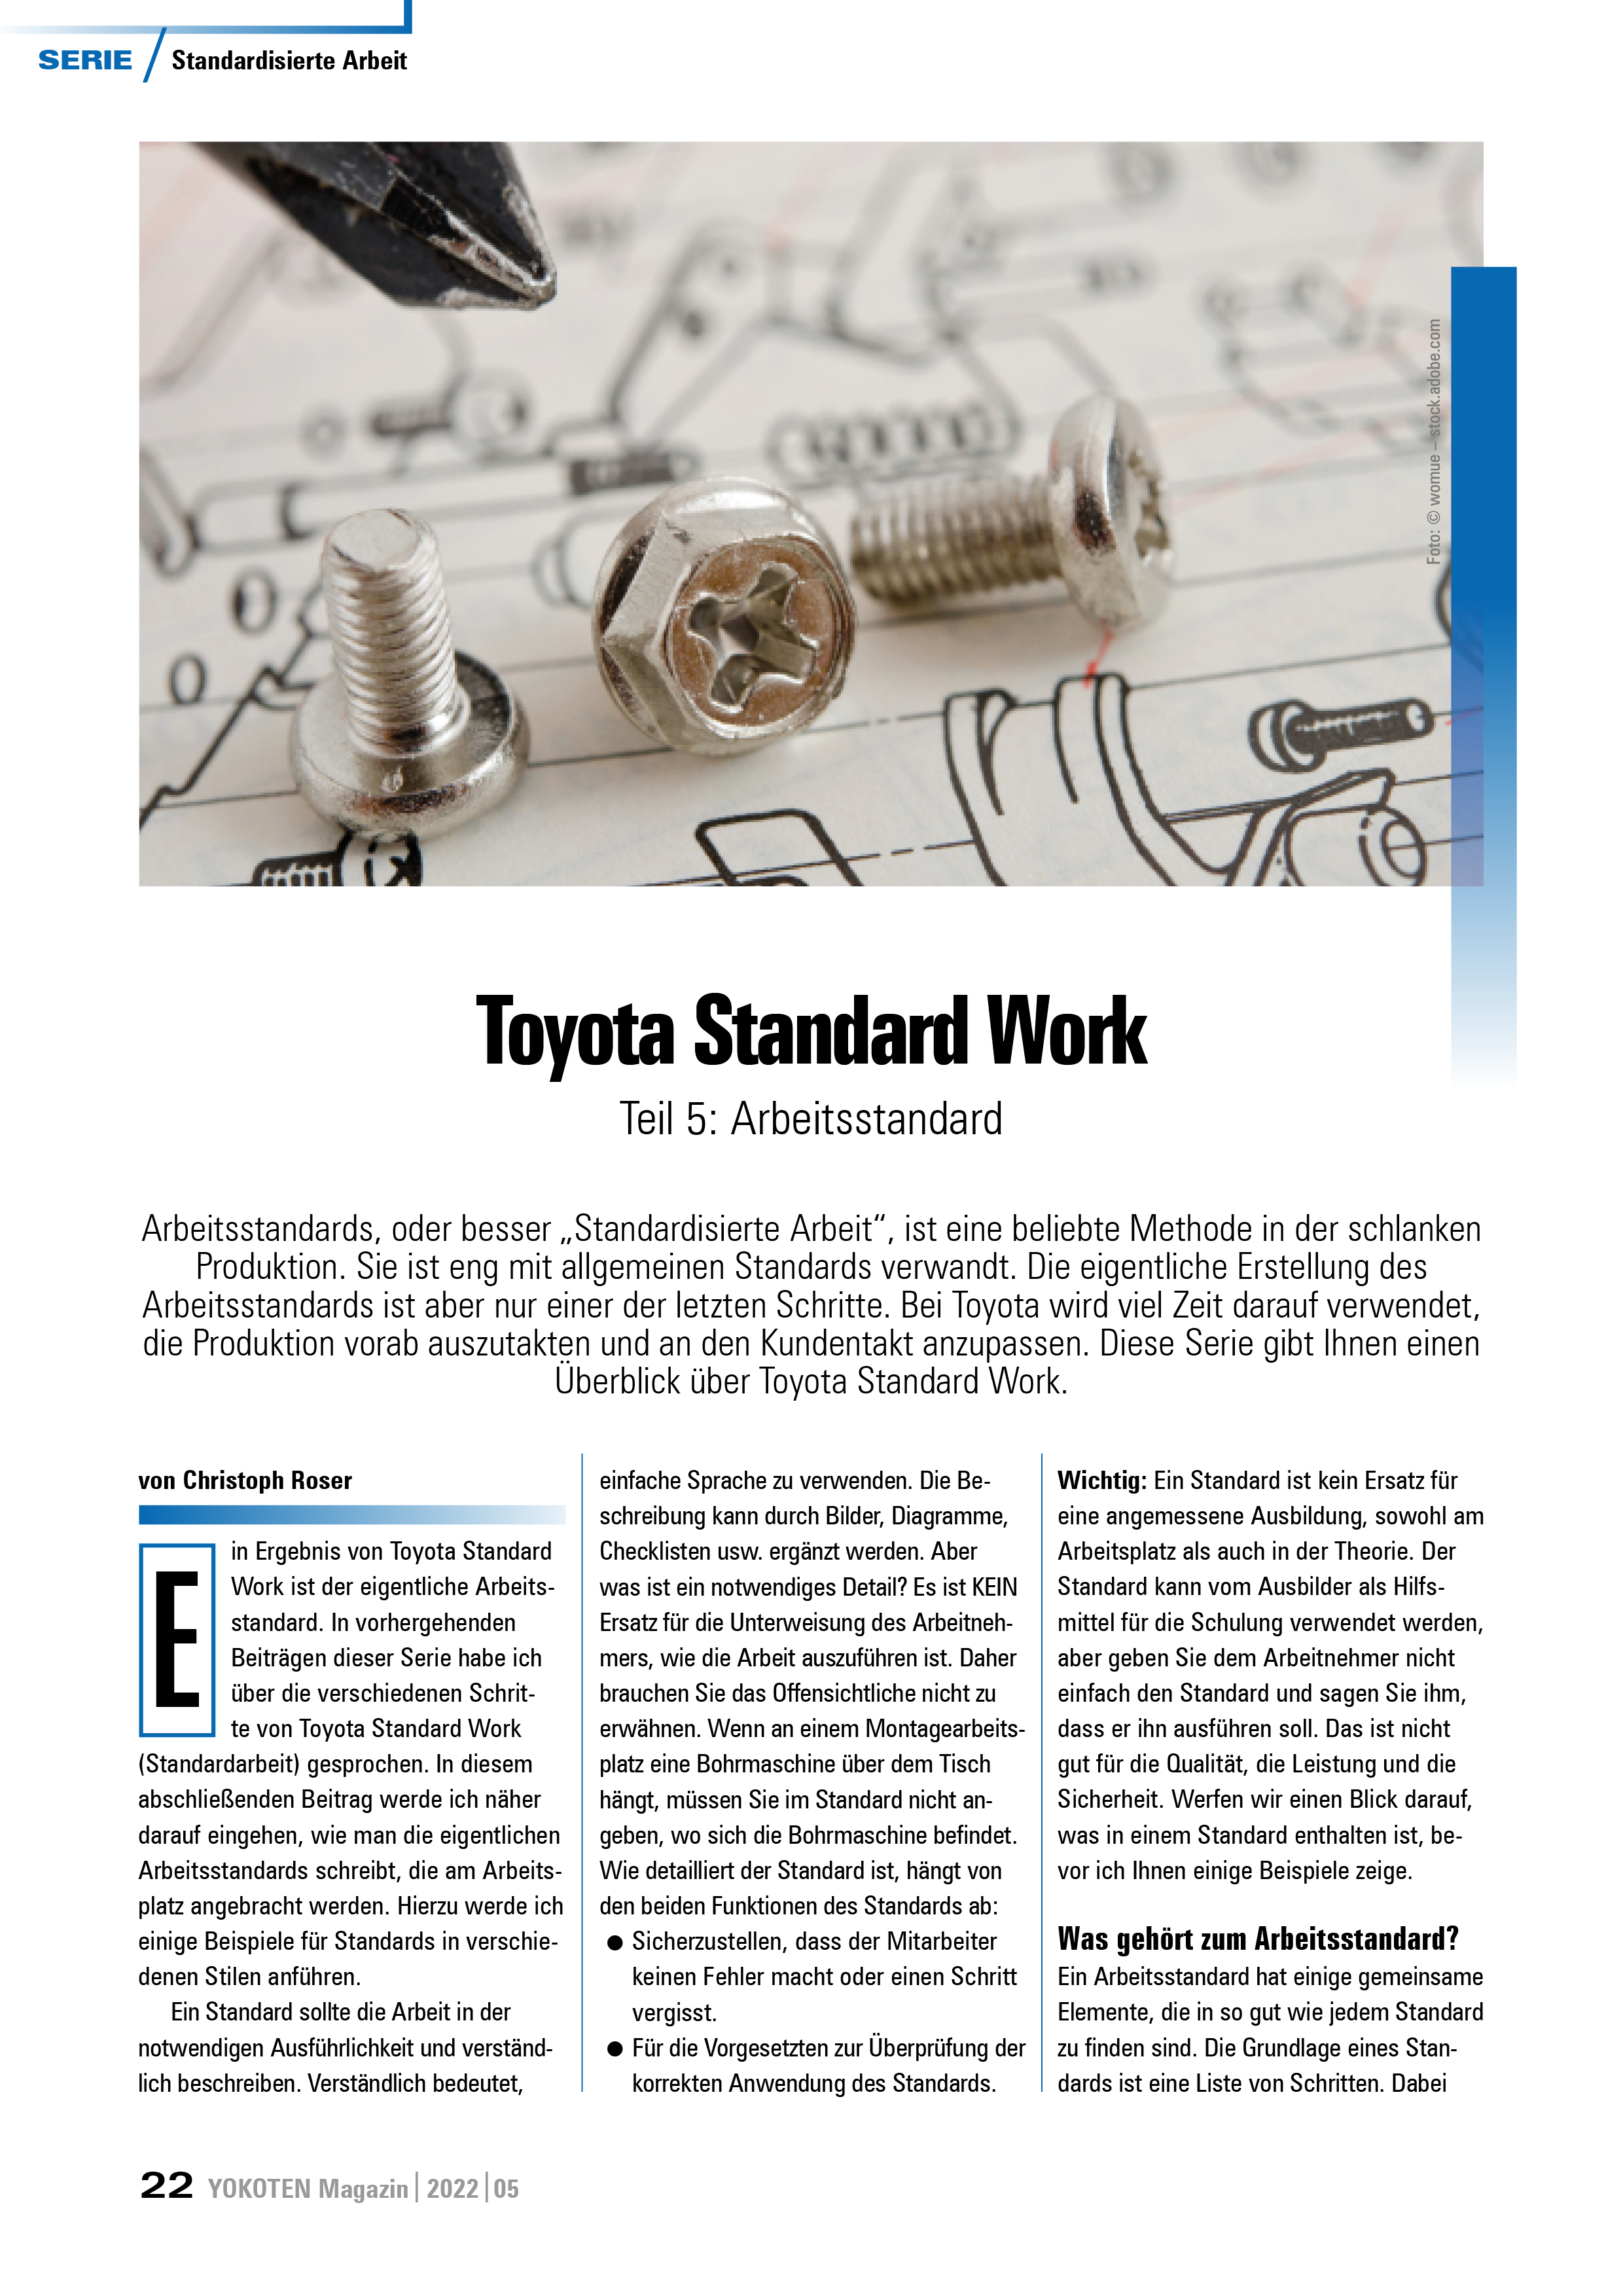 Toyota Standard Work - Artikel aus Fachmagazin YOKOTEN 2022-05